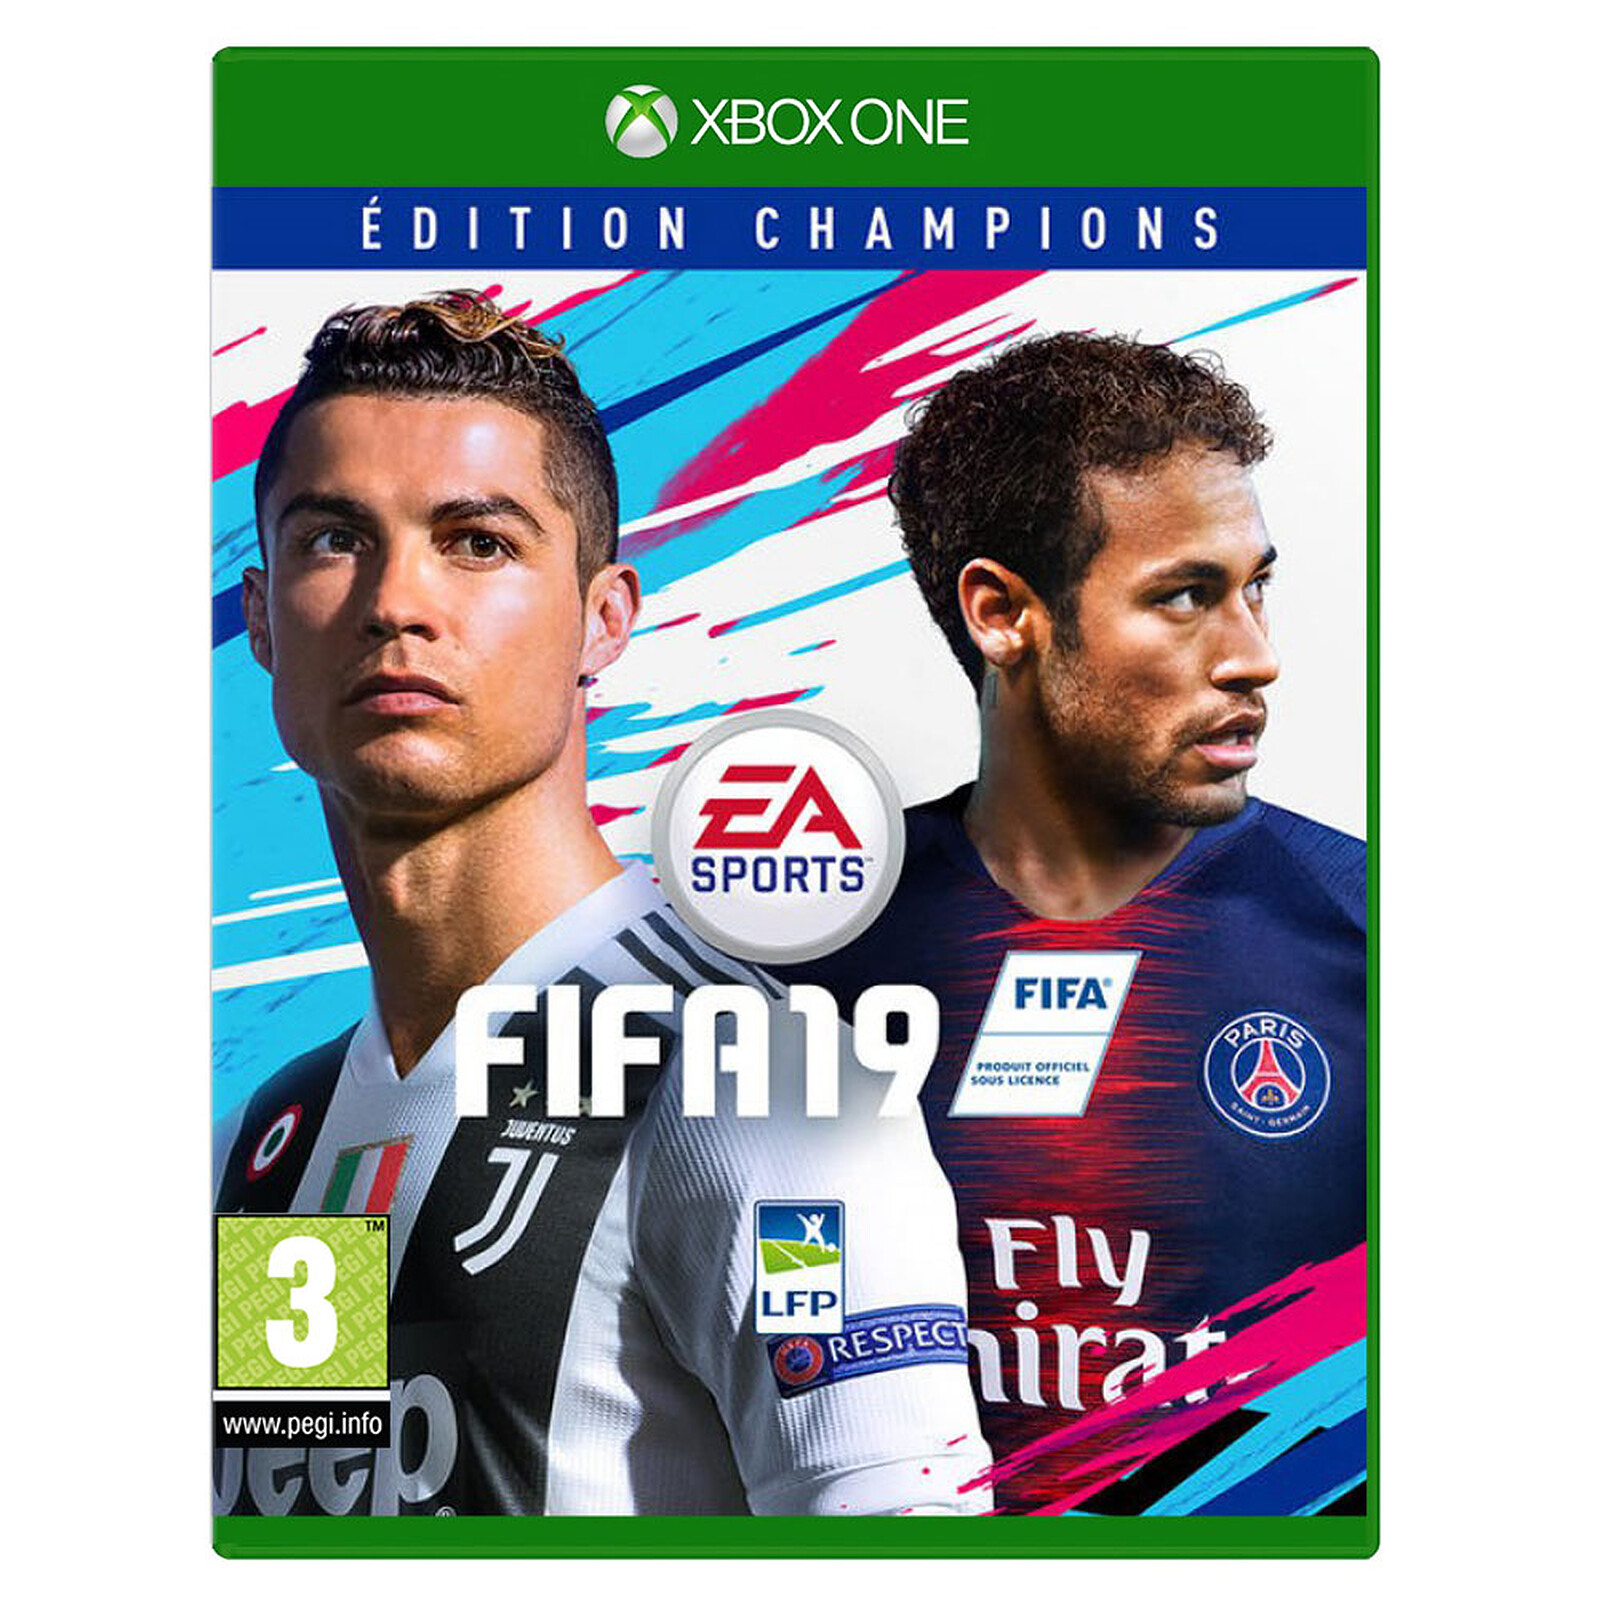 Gobernador Anunciante Mantenimiento FIFA 19 - Edición de Campeones (Xbox One) - Electronic Arts en LDLC |  ¡Musericordia!